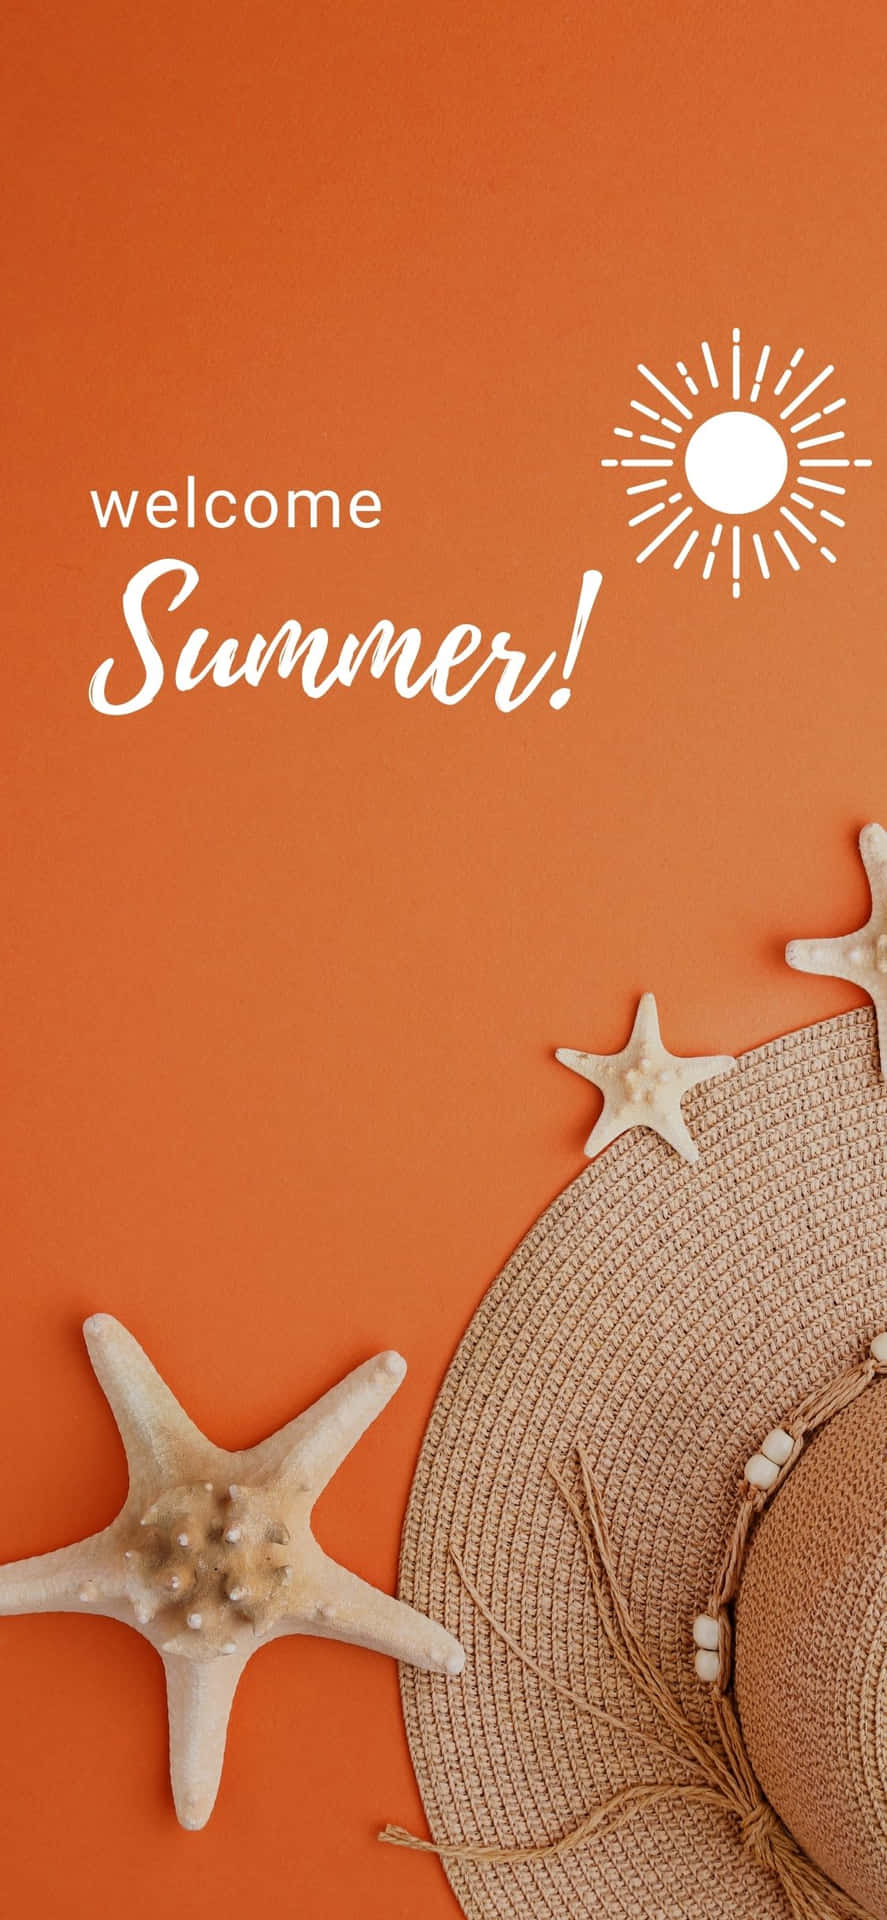 Sun Hat On Orange Table iPhone X Summer Background